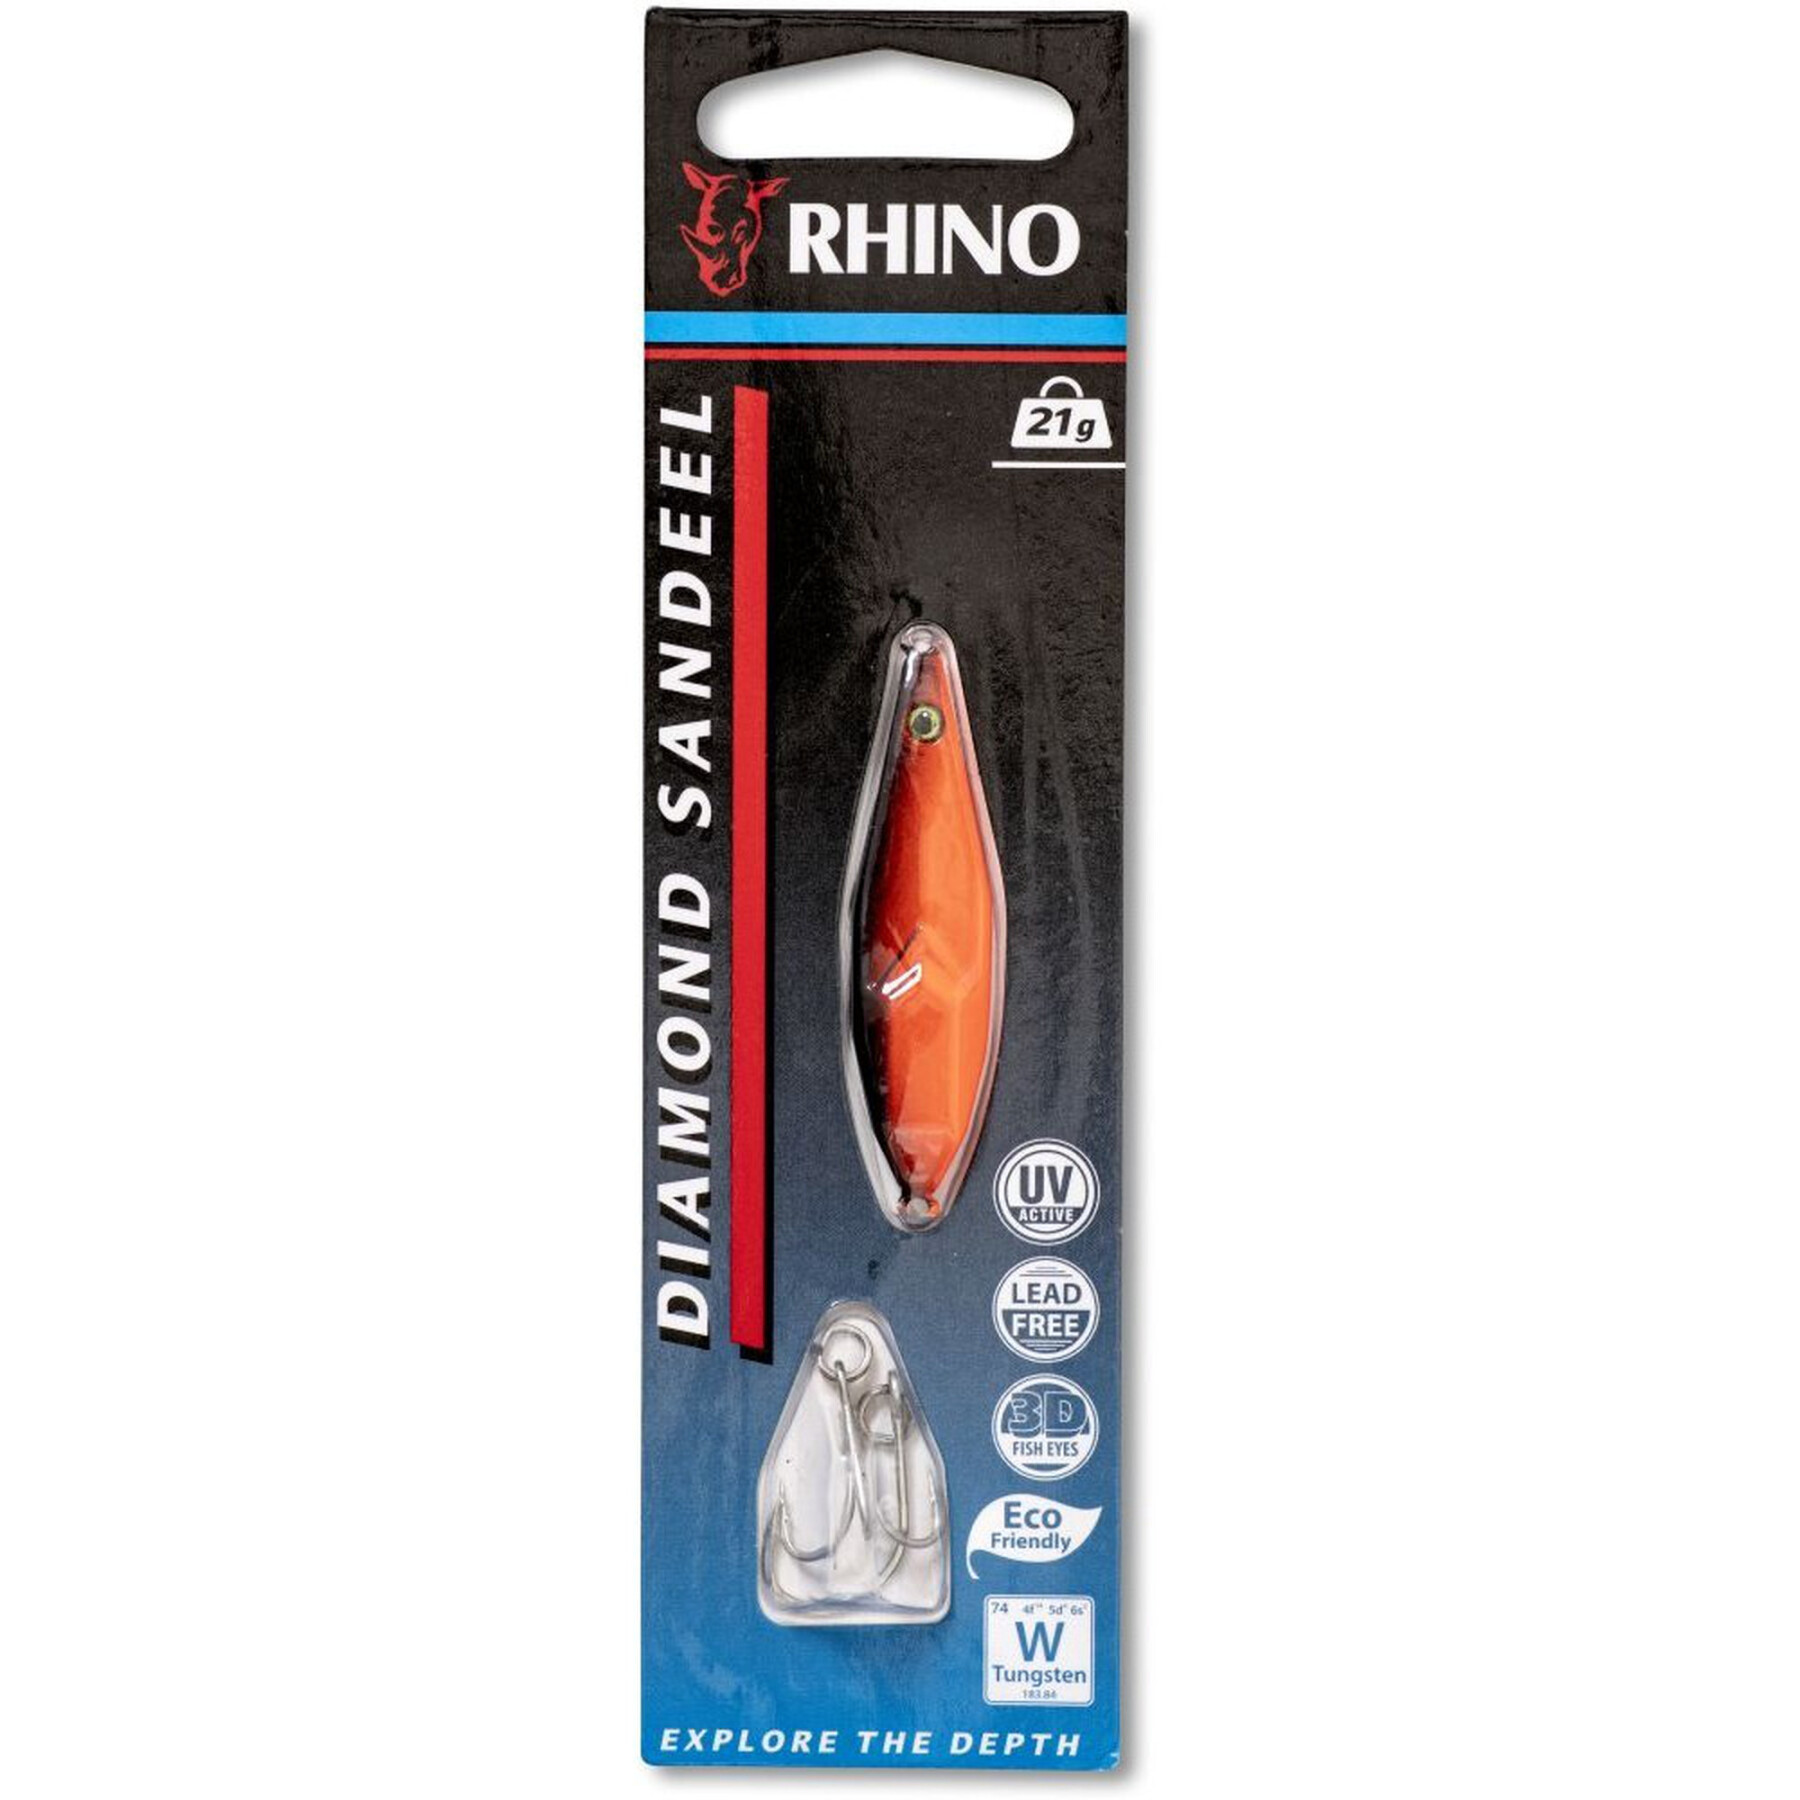 Lok Rhino Diamond Sandeel – 21g